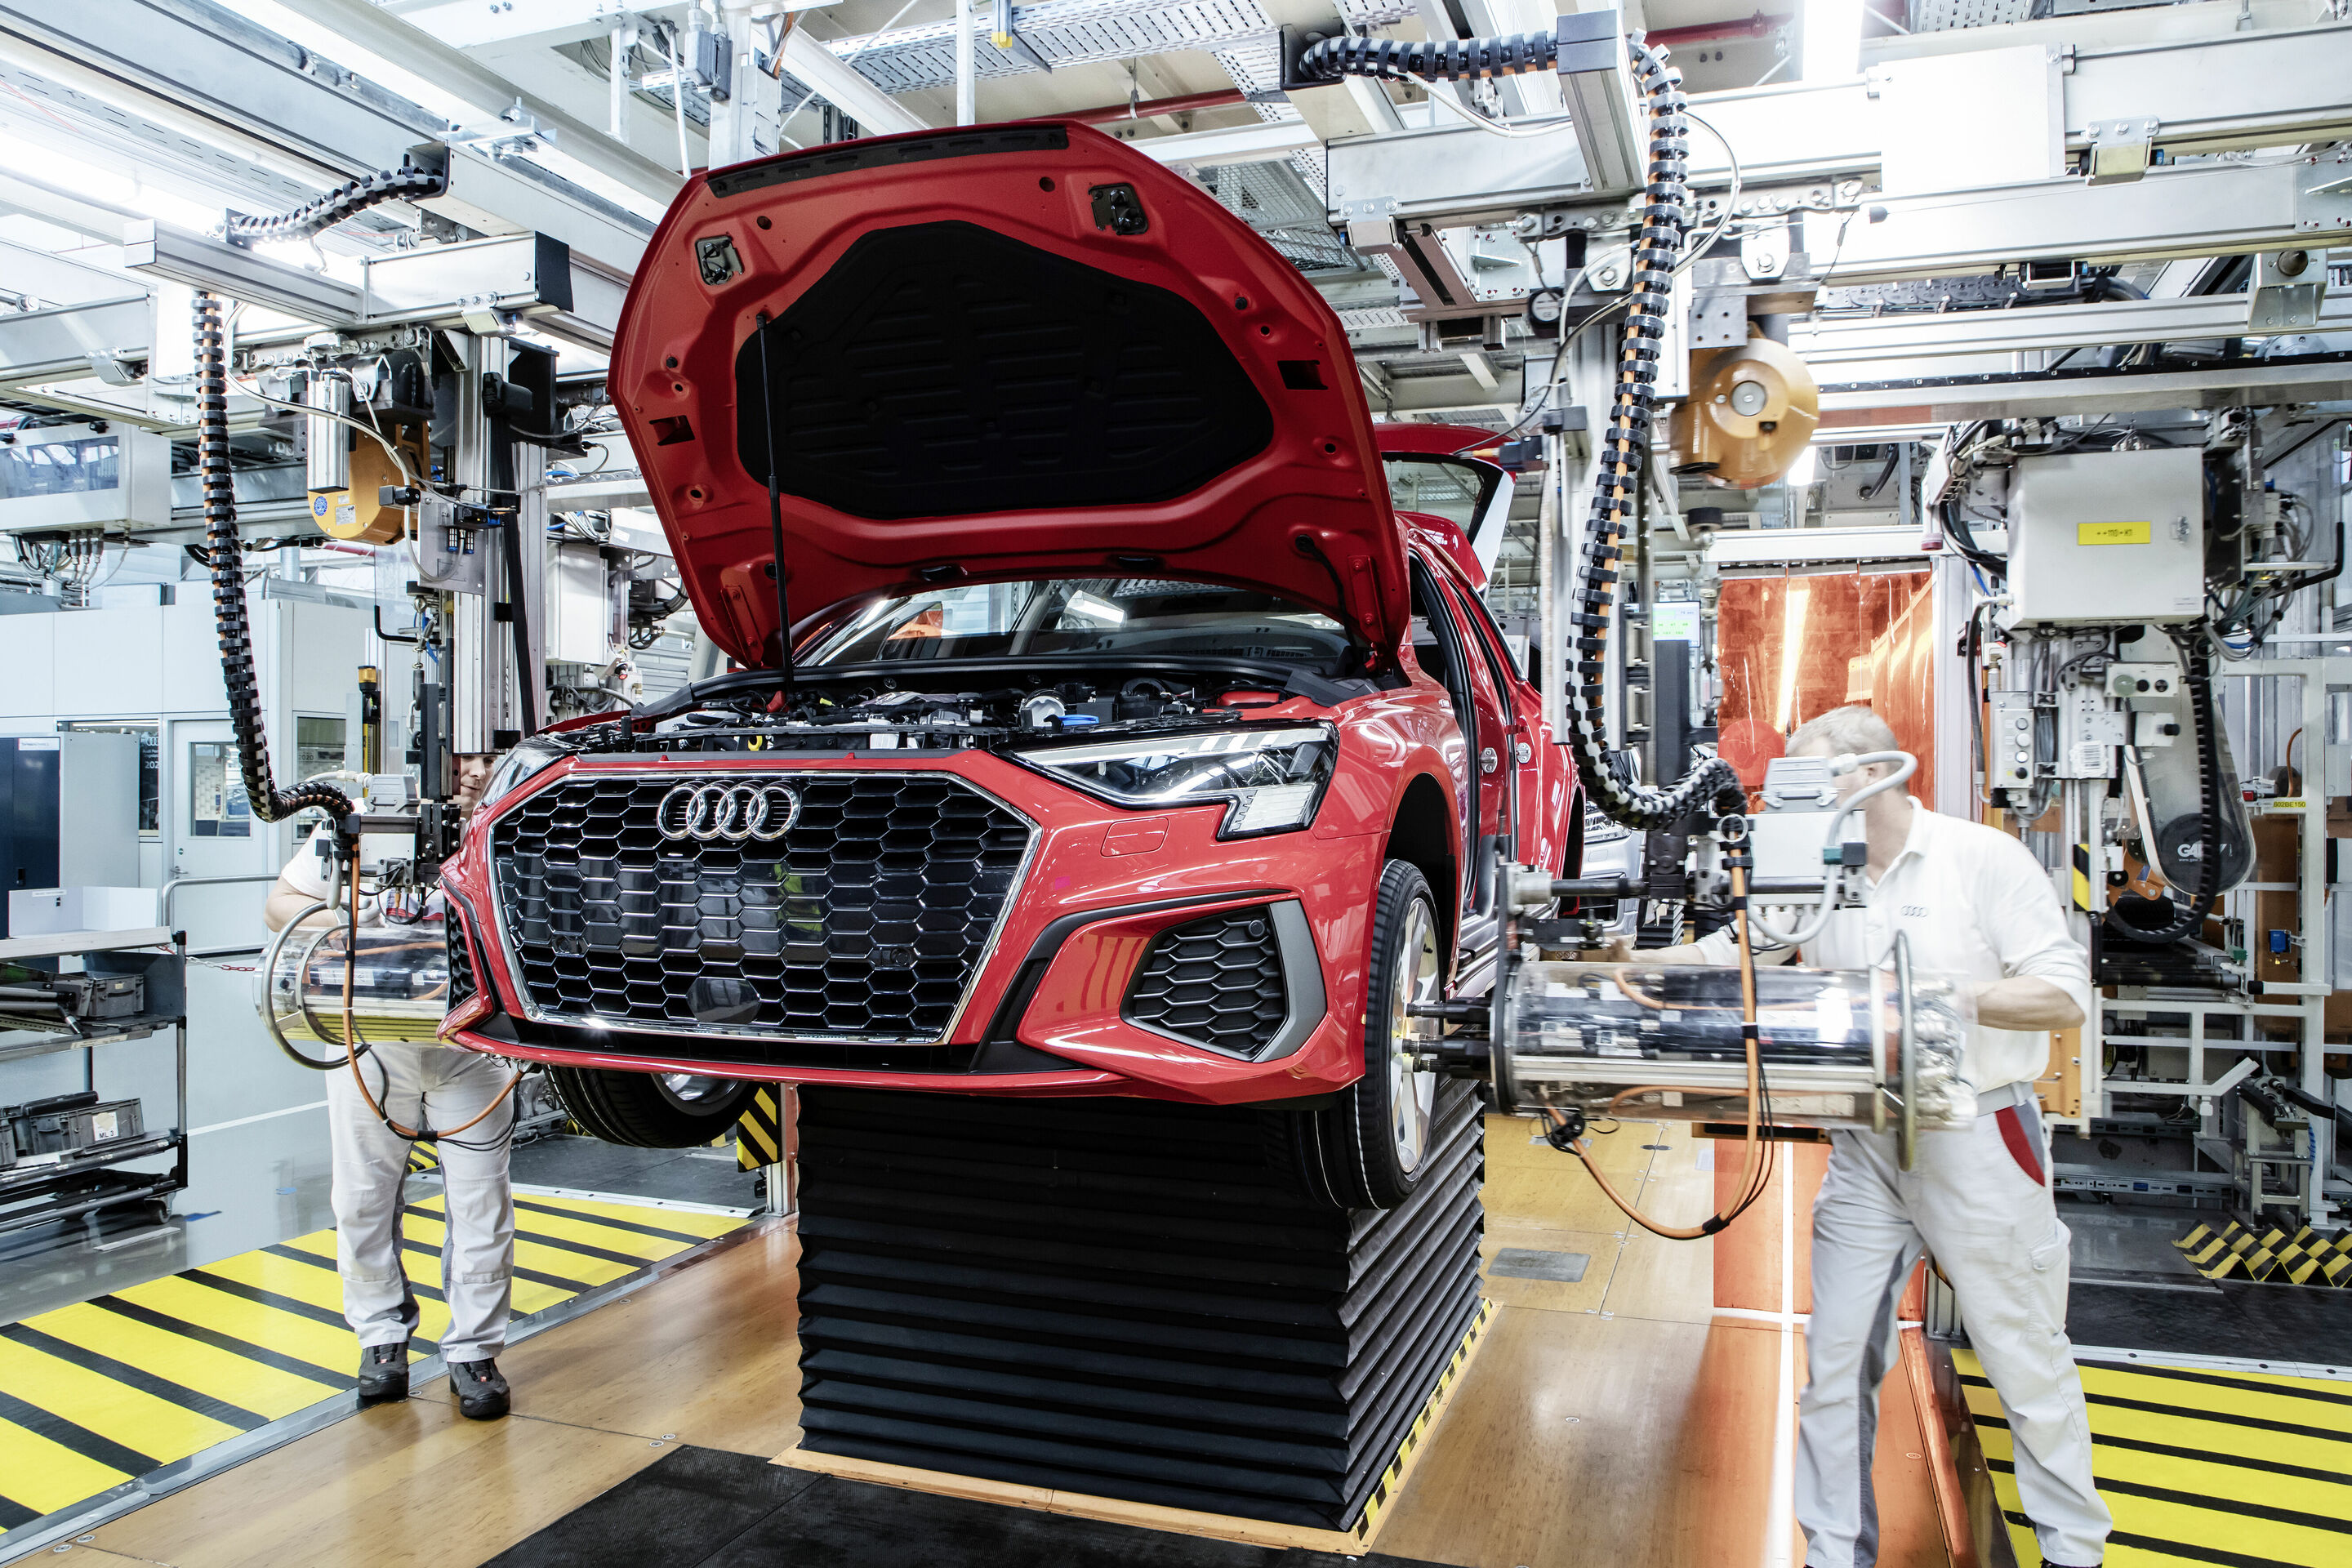 Generationswechsel: Produktionsstart des neuen Audi A3 Sportback in Ingolstadt